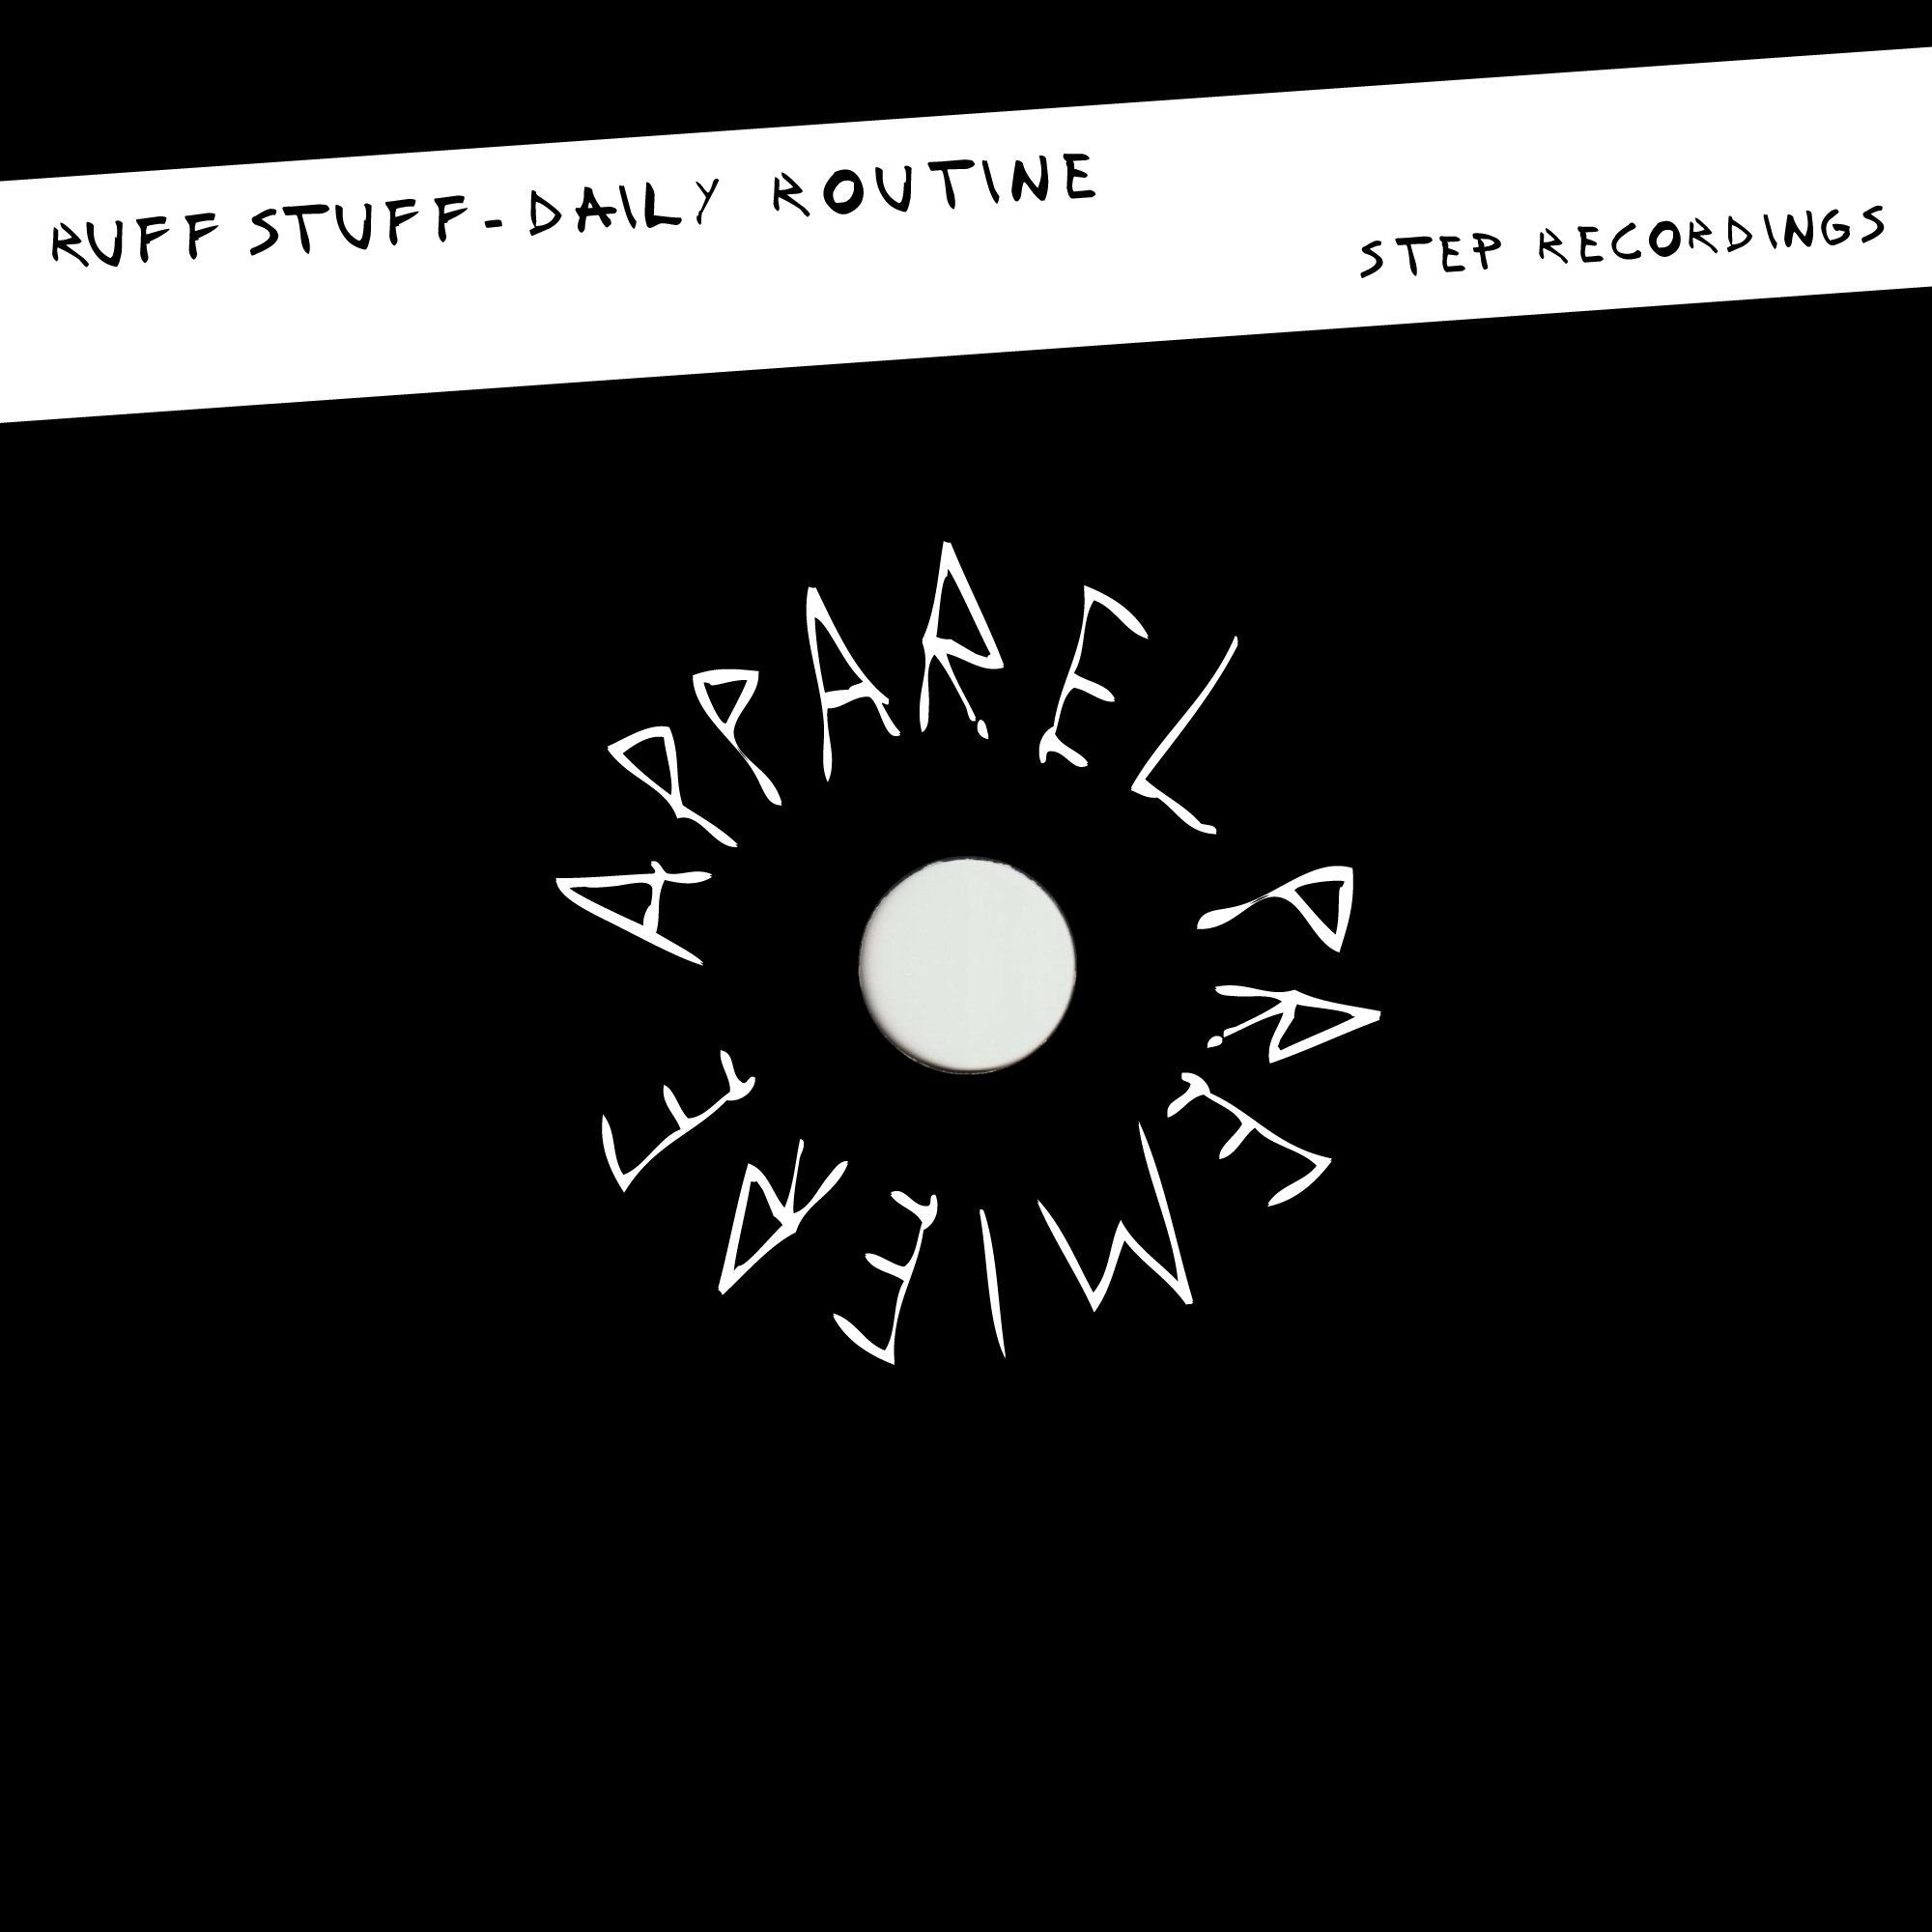 APPAREL PREMIERE: Ruff Stuff – Daily Routine [Step Recordings]